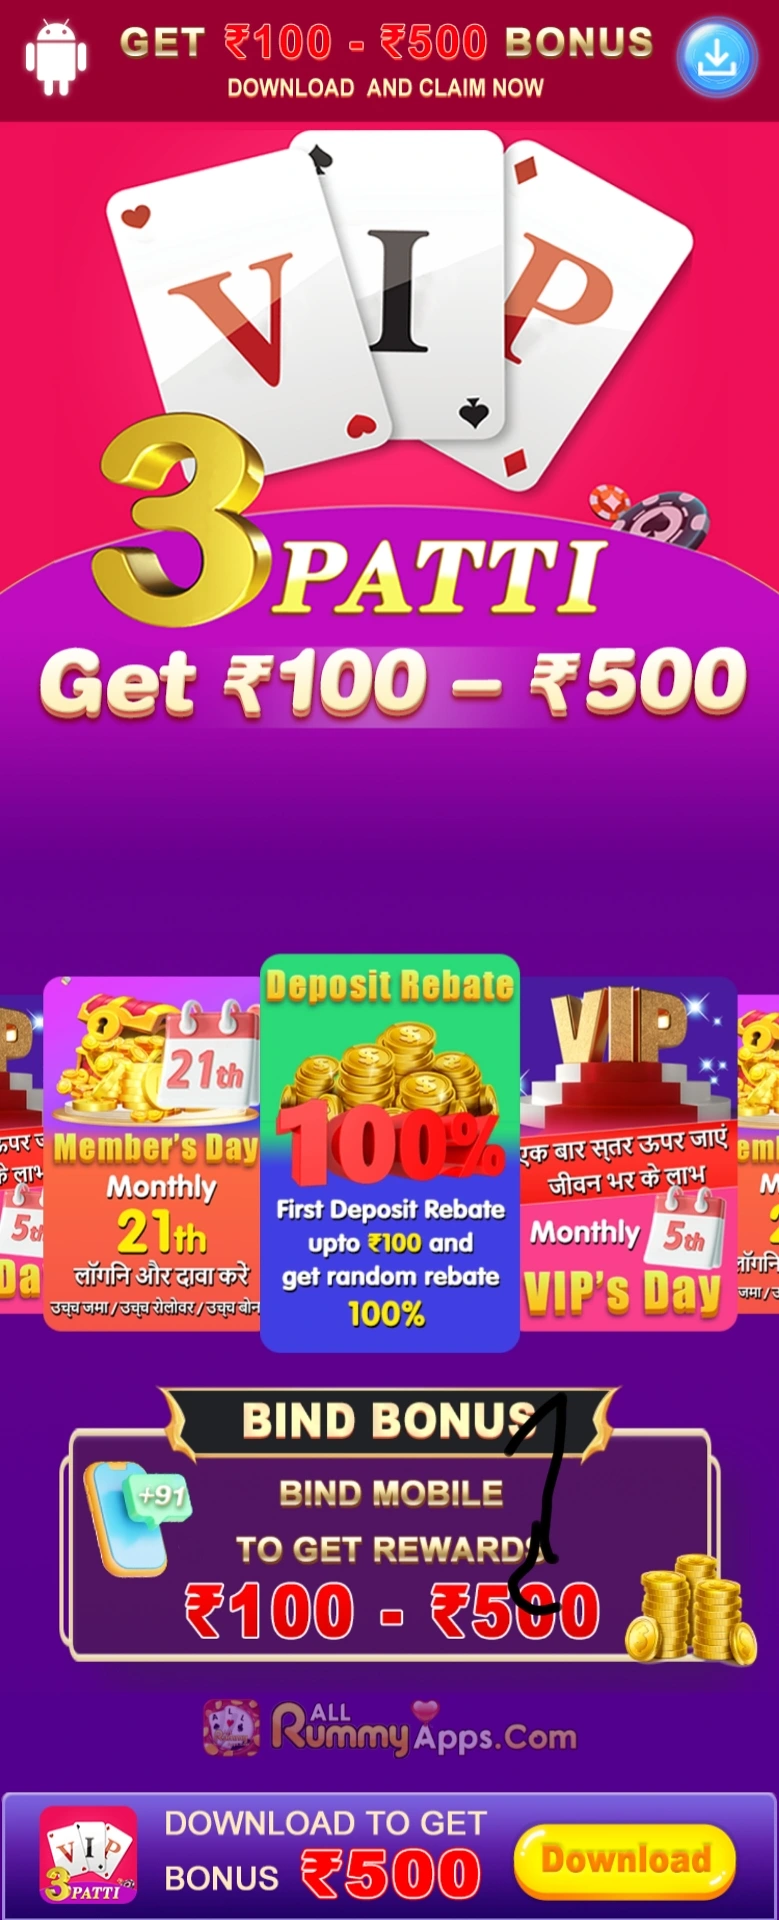 VIP 3Patti App - India Rummy APk